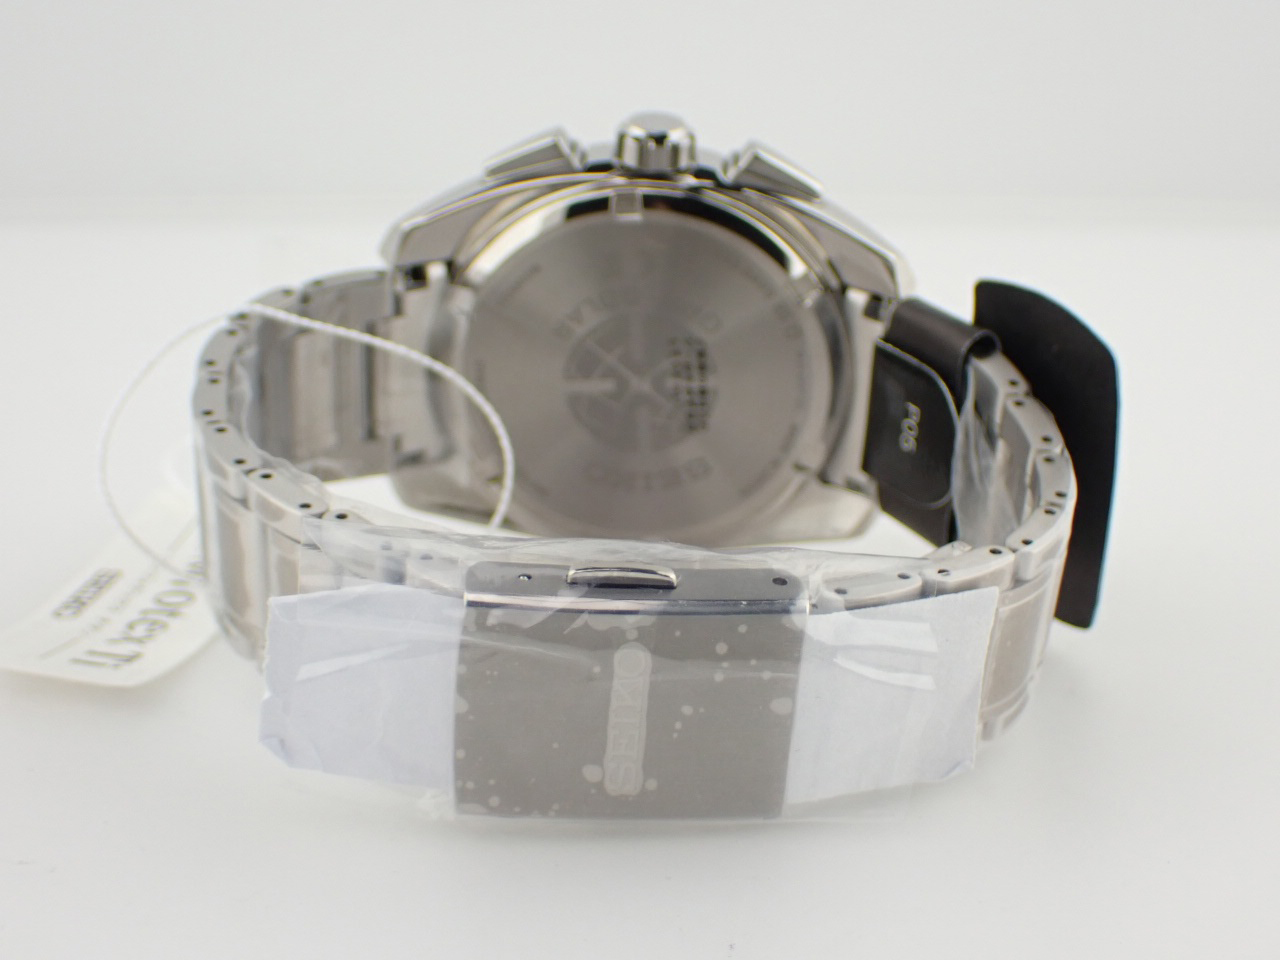 SEIKO セイコー  ASTRON アストロン 腕時計 5X53-0AV0/SBXC067 チタン   シルバー ブラック文字盤  GPS ソーラー電波 クロノグラフ 【本物保証】